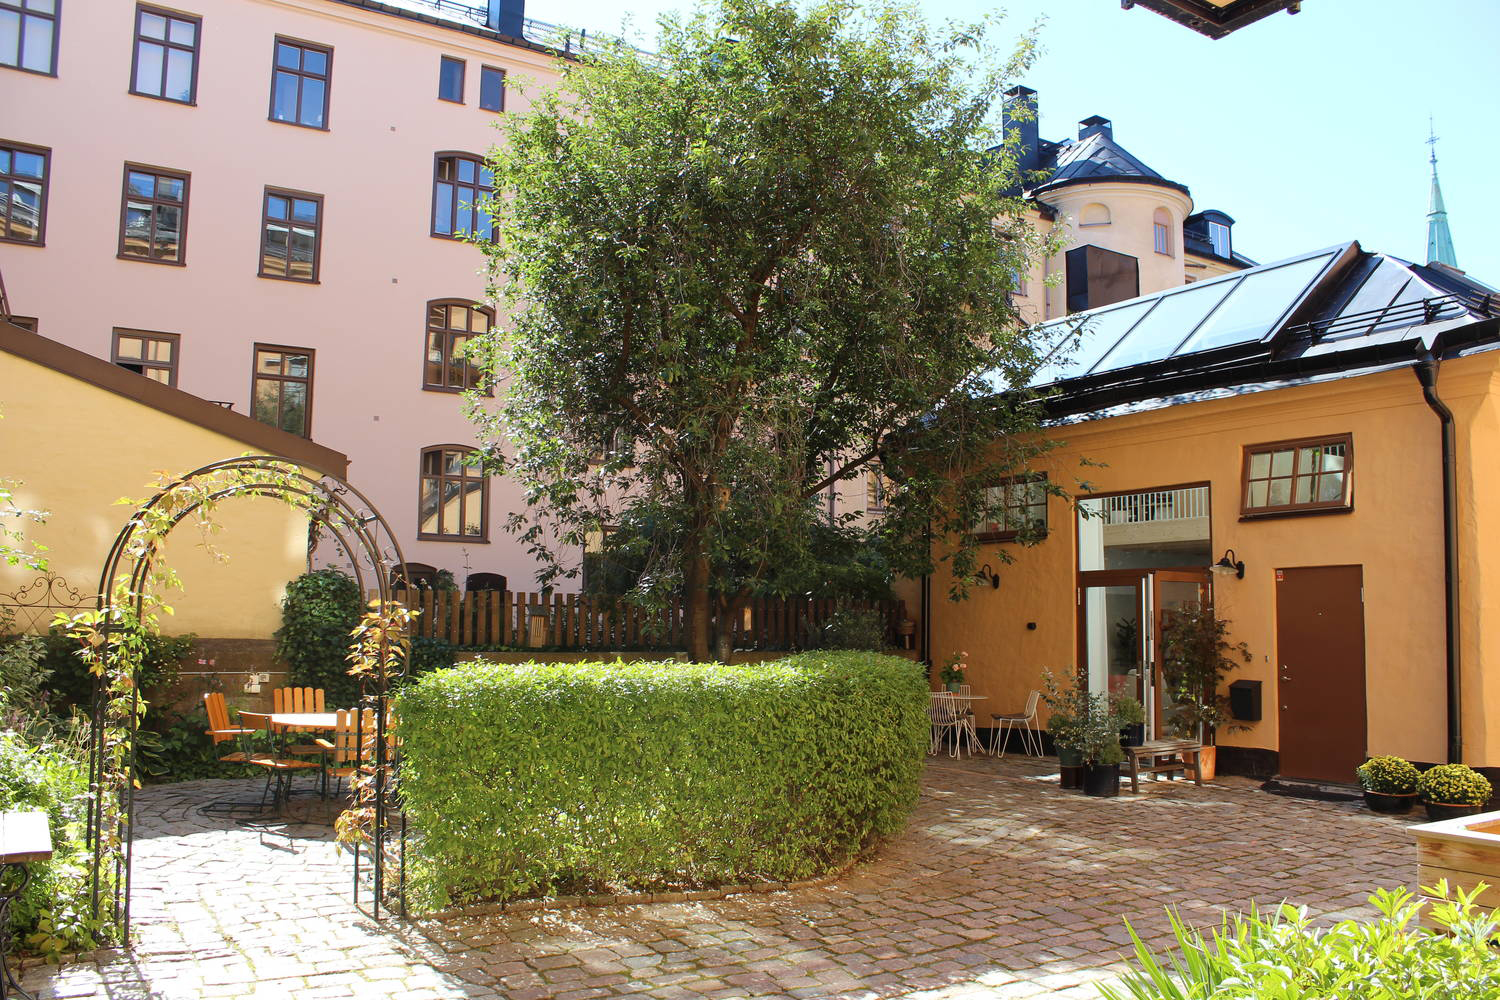 Hem furniture brand founder Petrus Palmér lists his Stockholm home